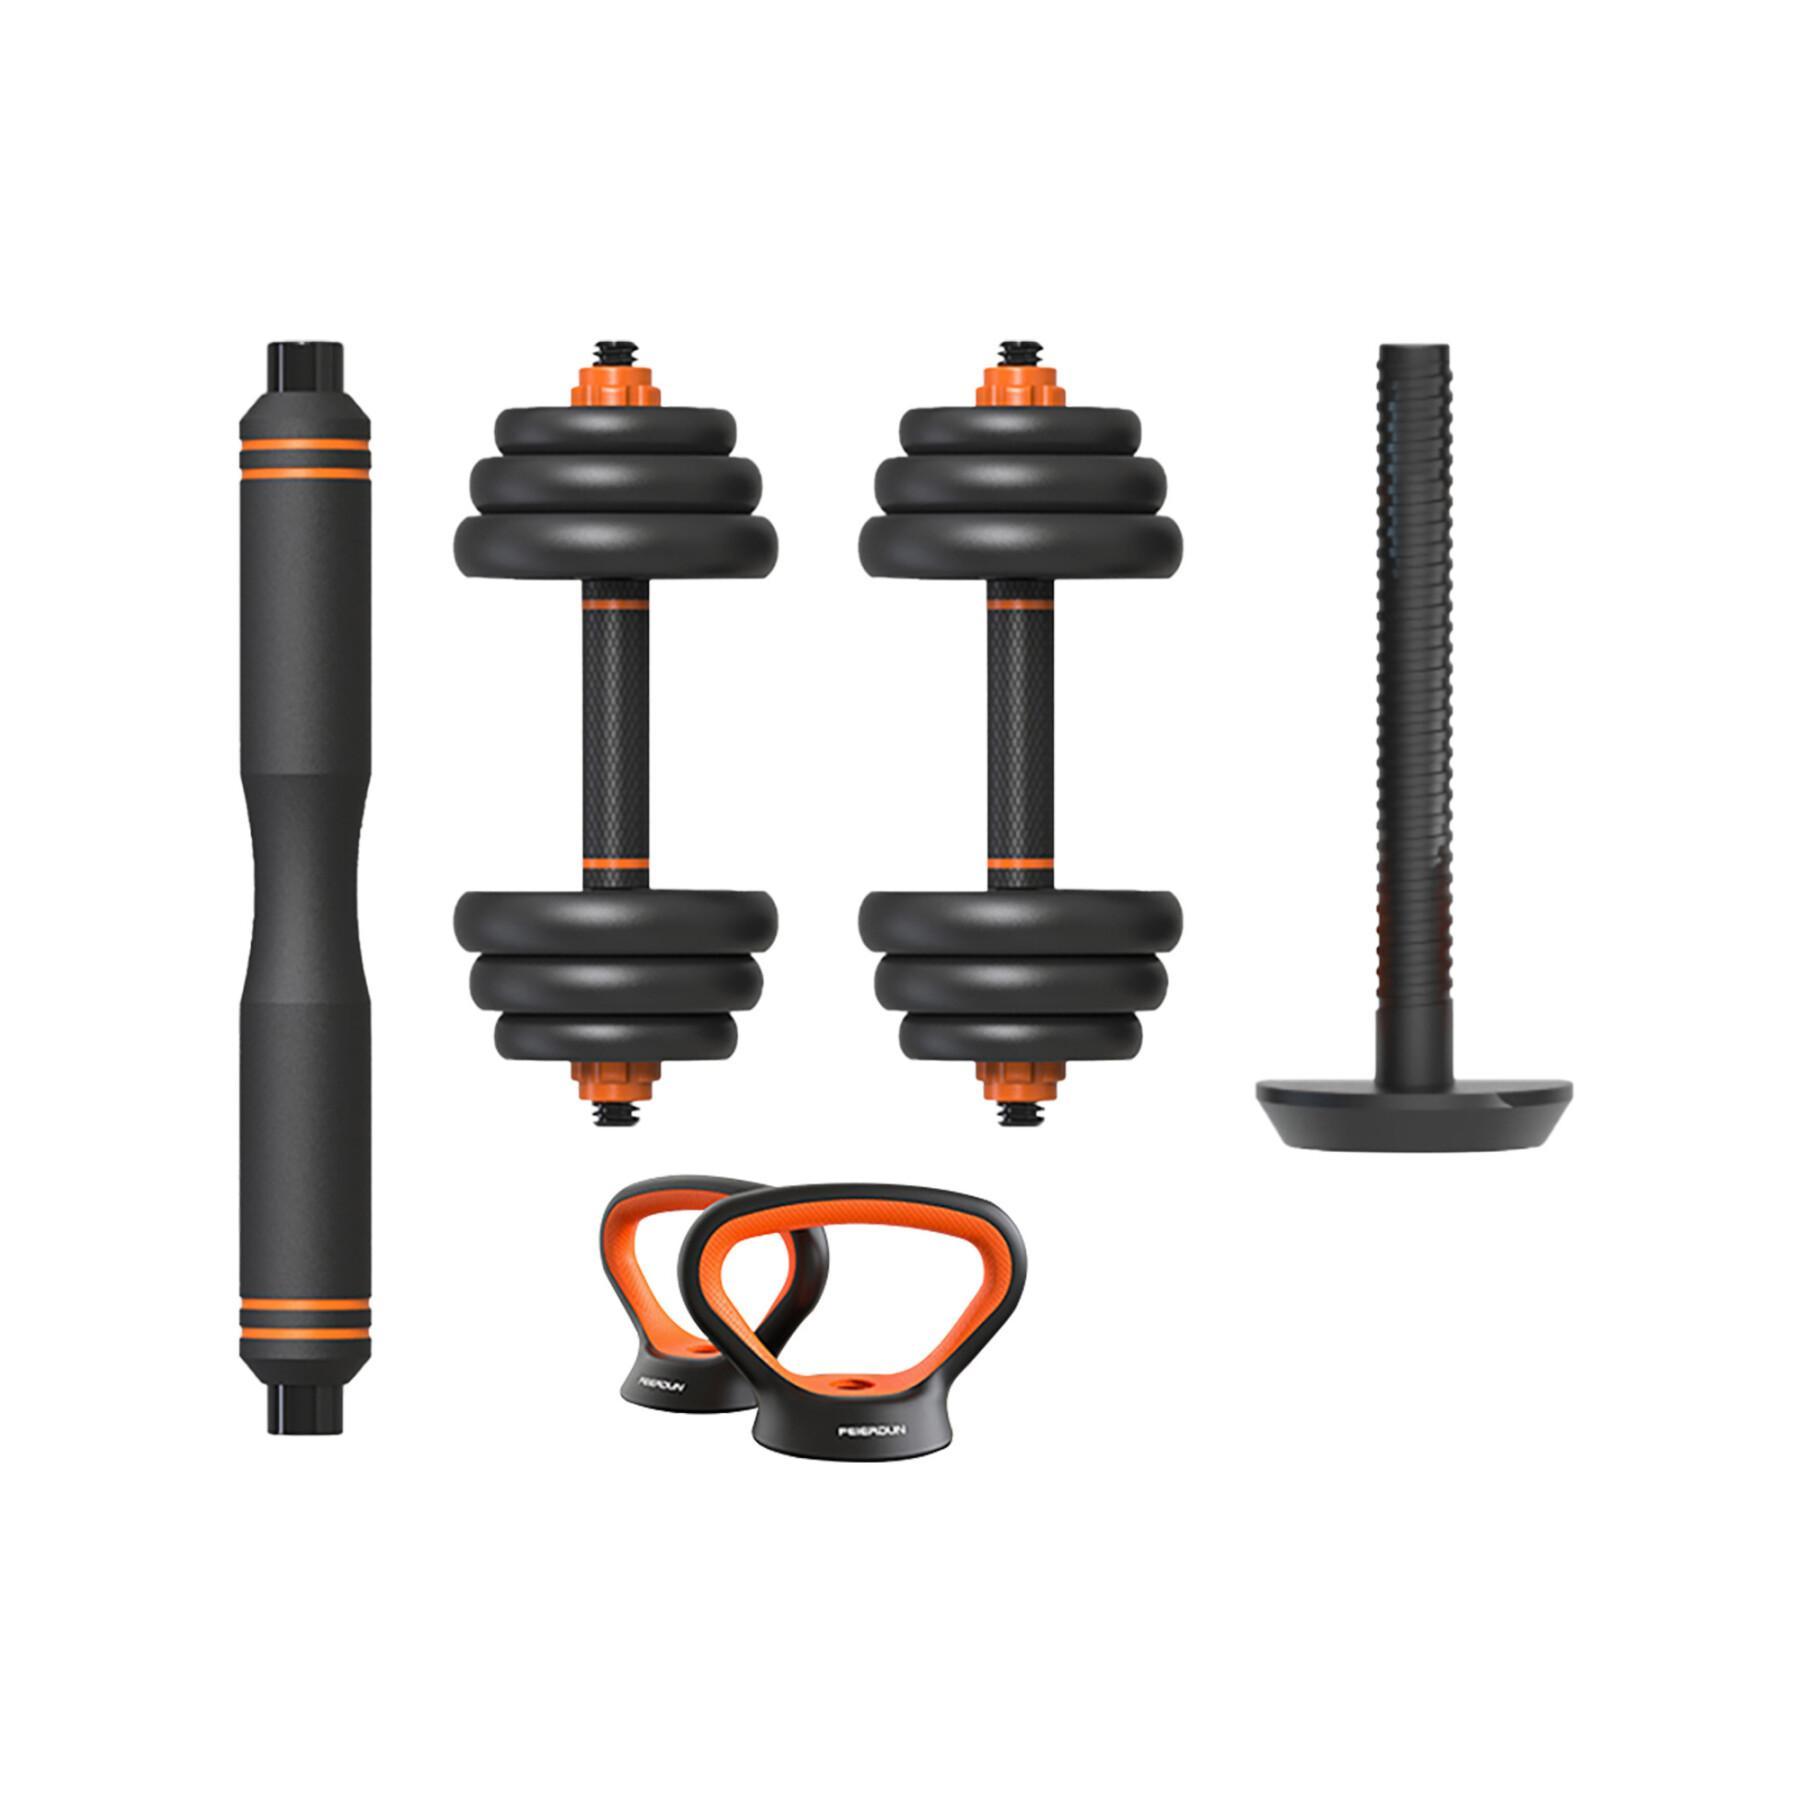 Smart kit hantla + drążek + kettlebell + czujnik Xiaomi Fed 20 kg